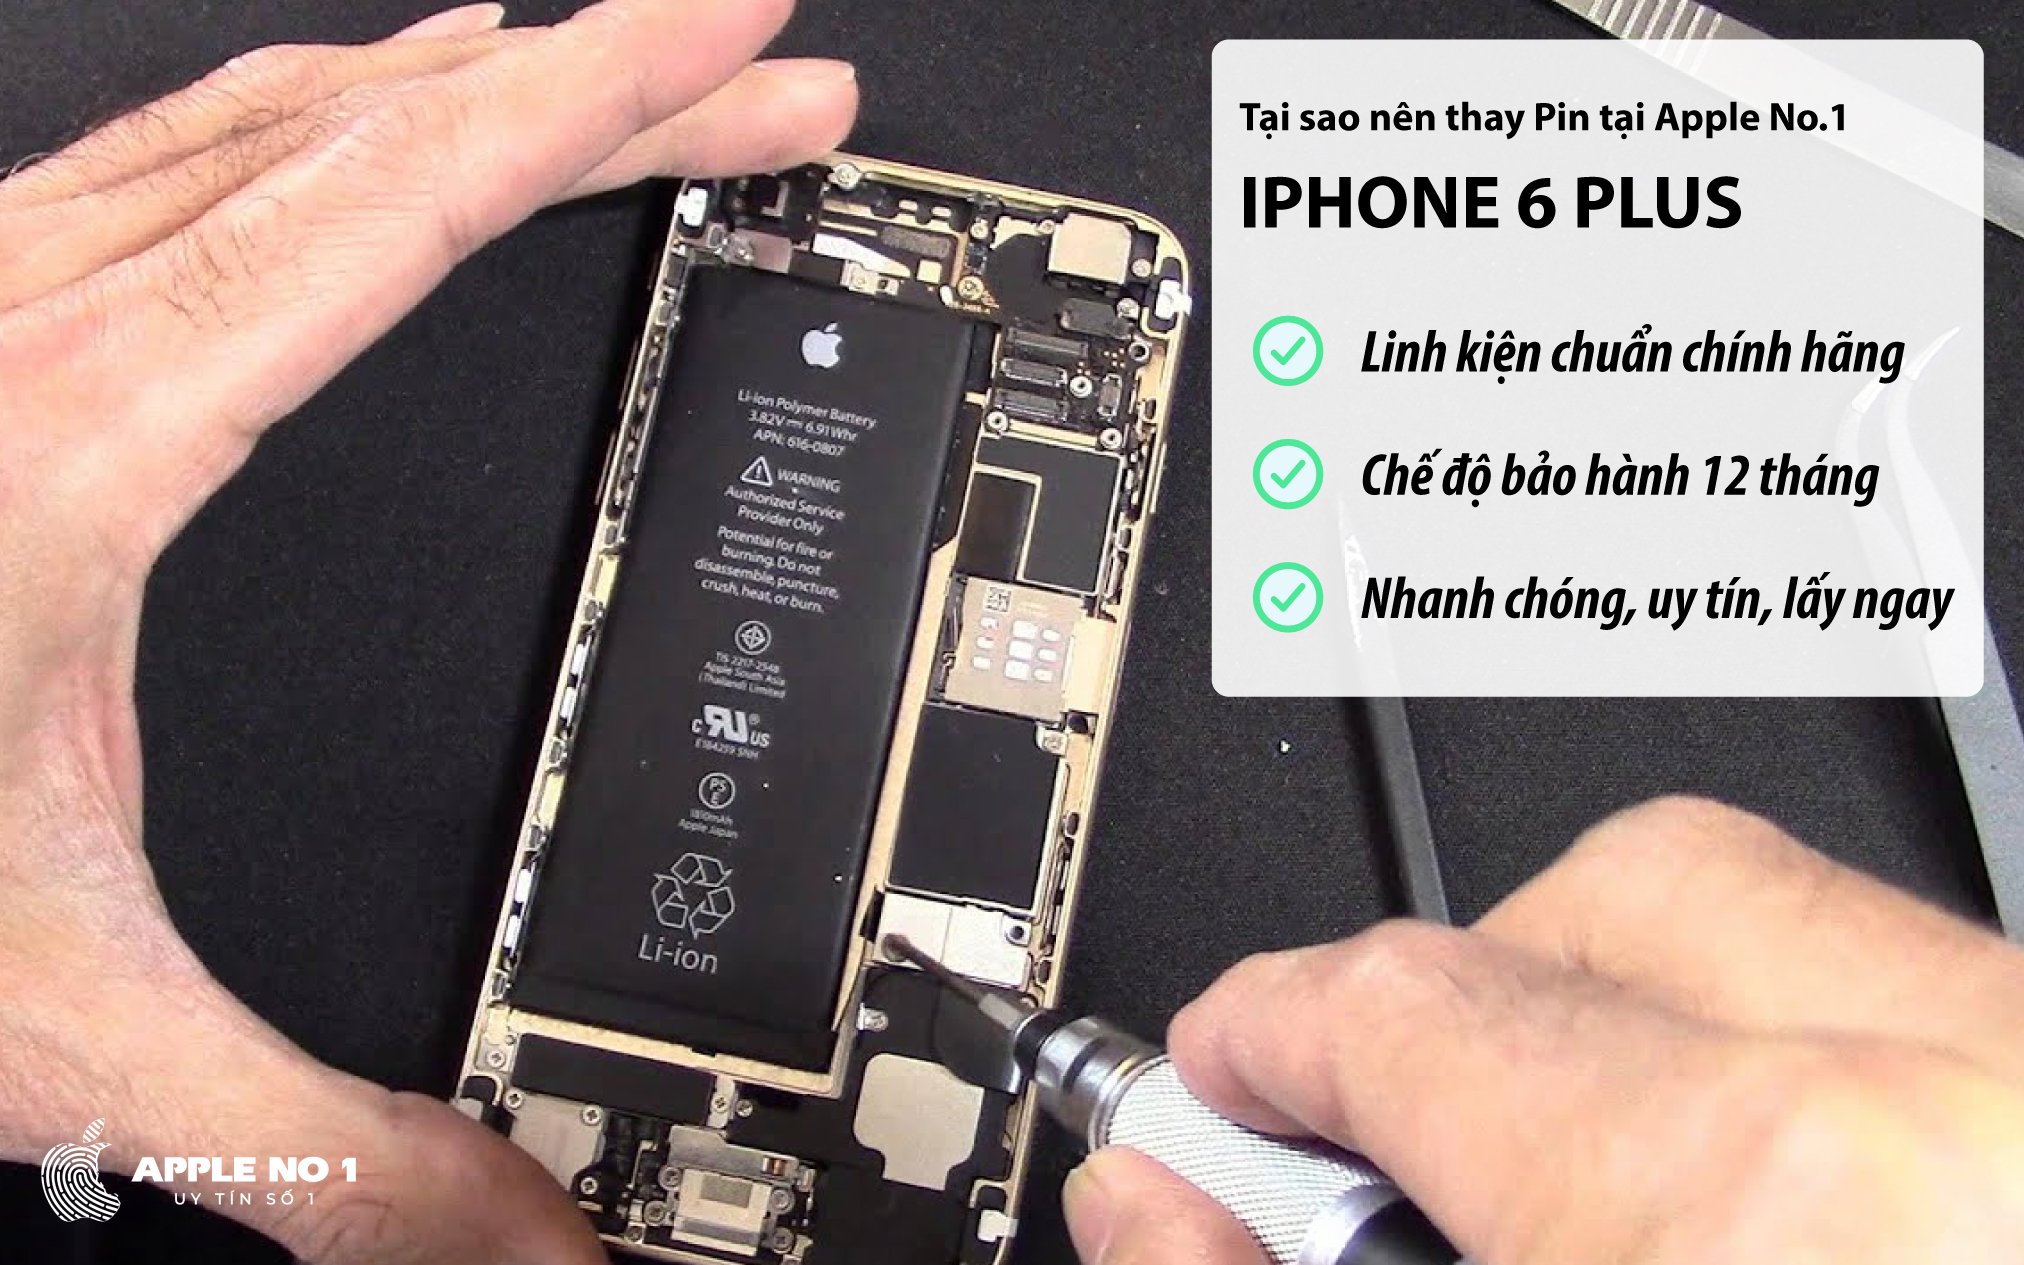 Thay pin iPhone 6 Plus dung lượng chuan chinh hang tai Apple No.1